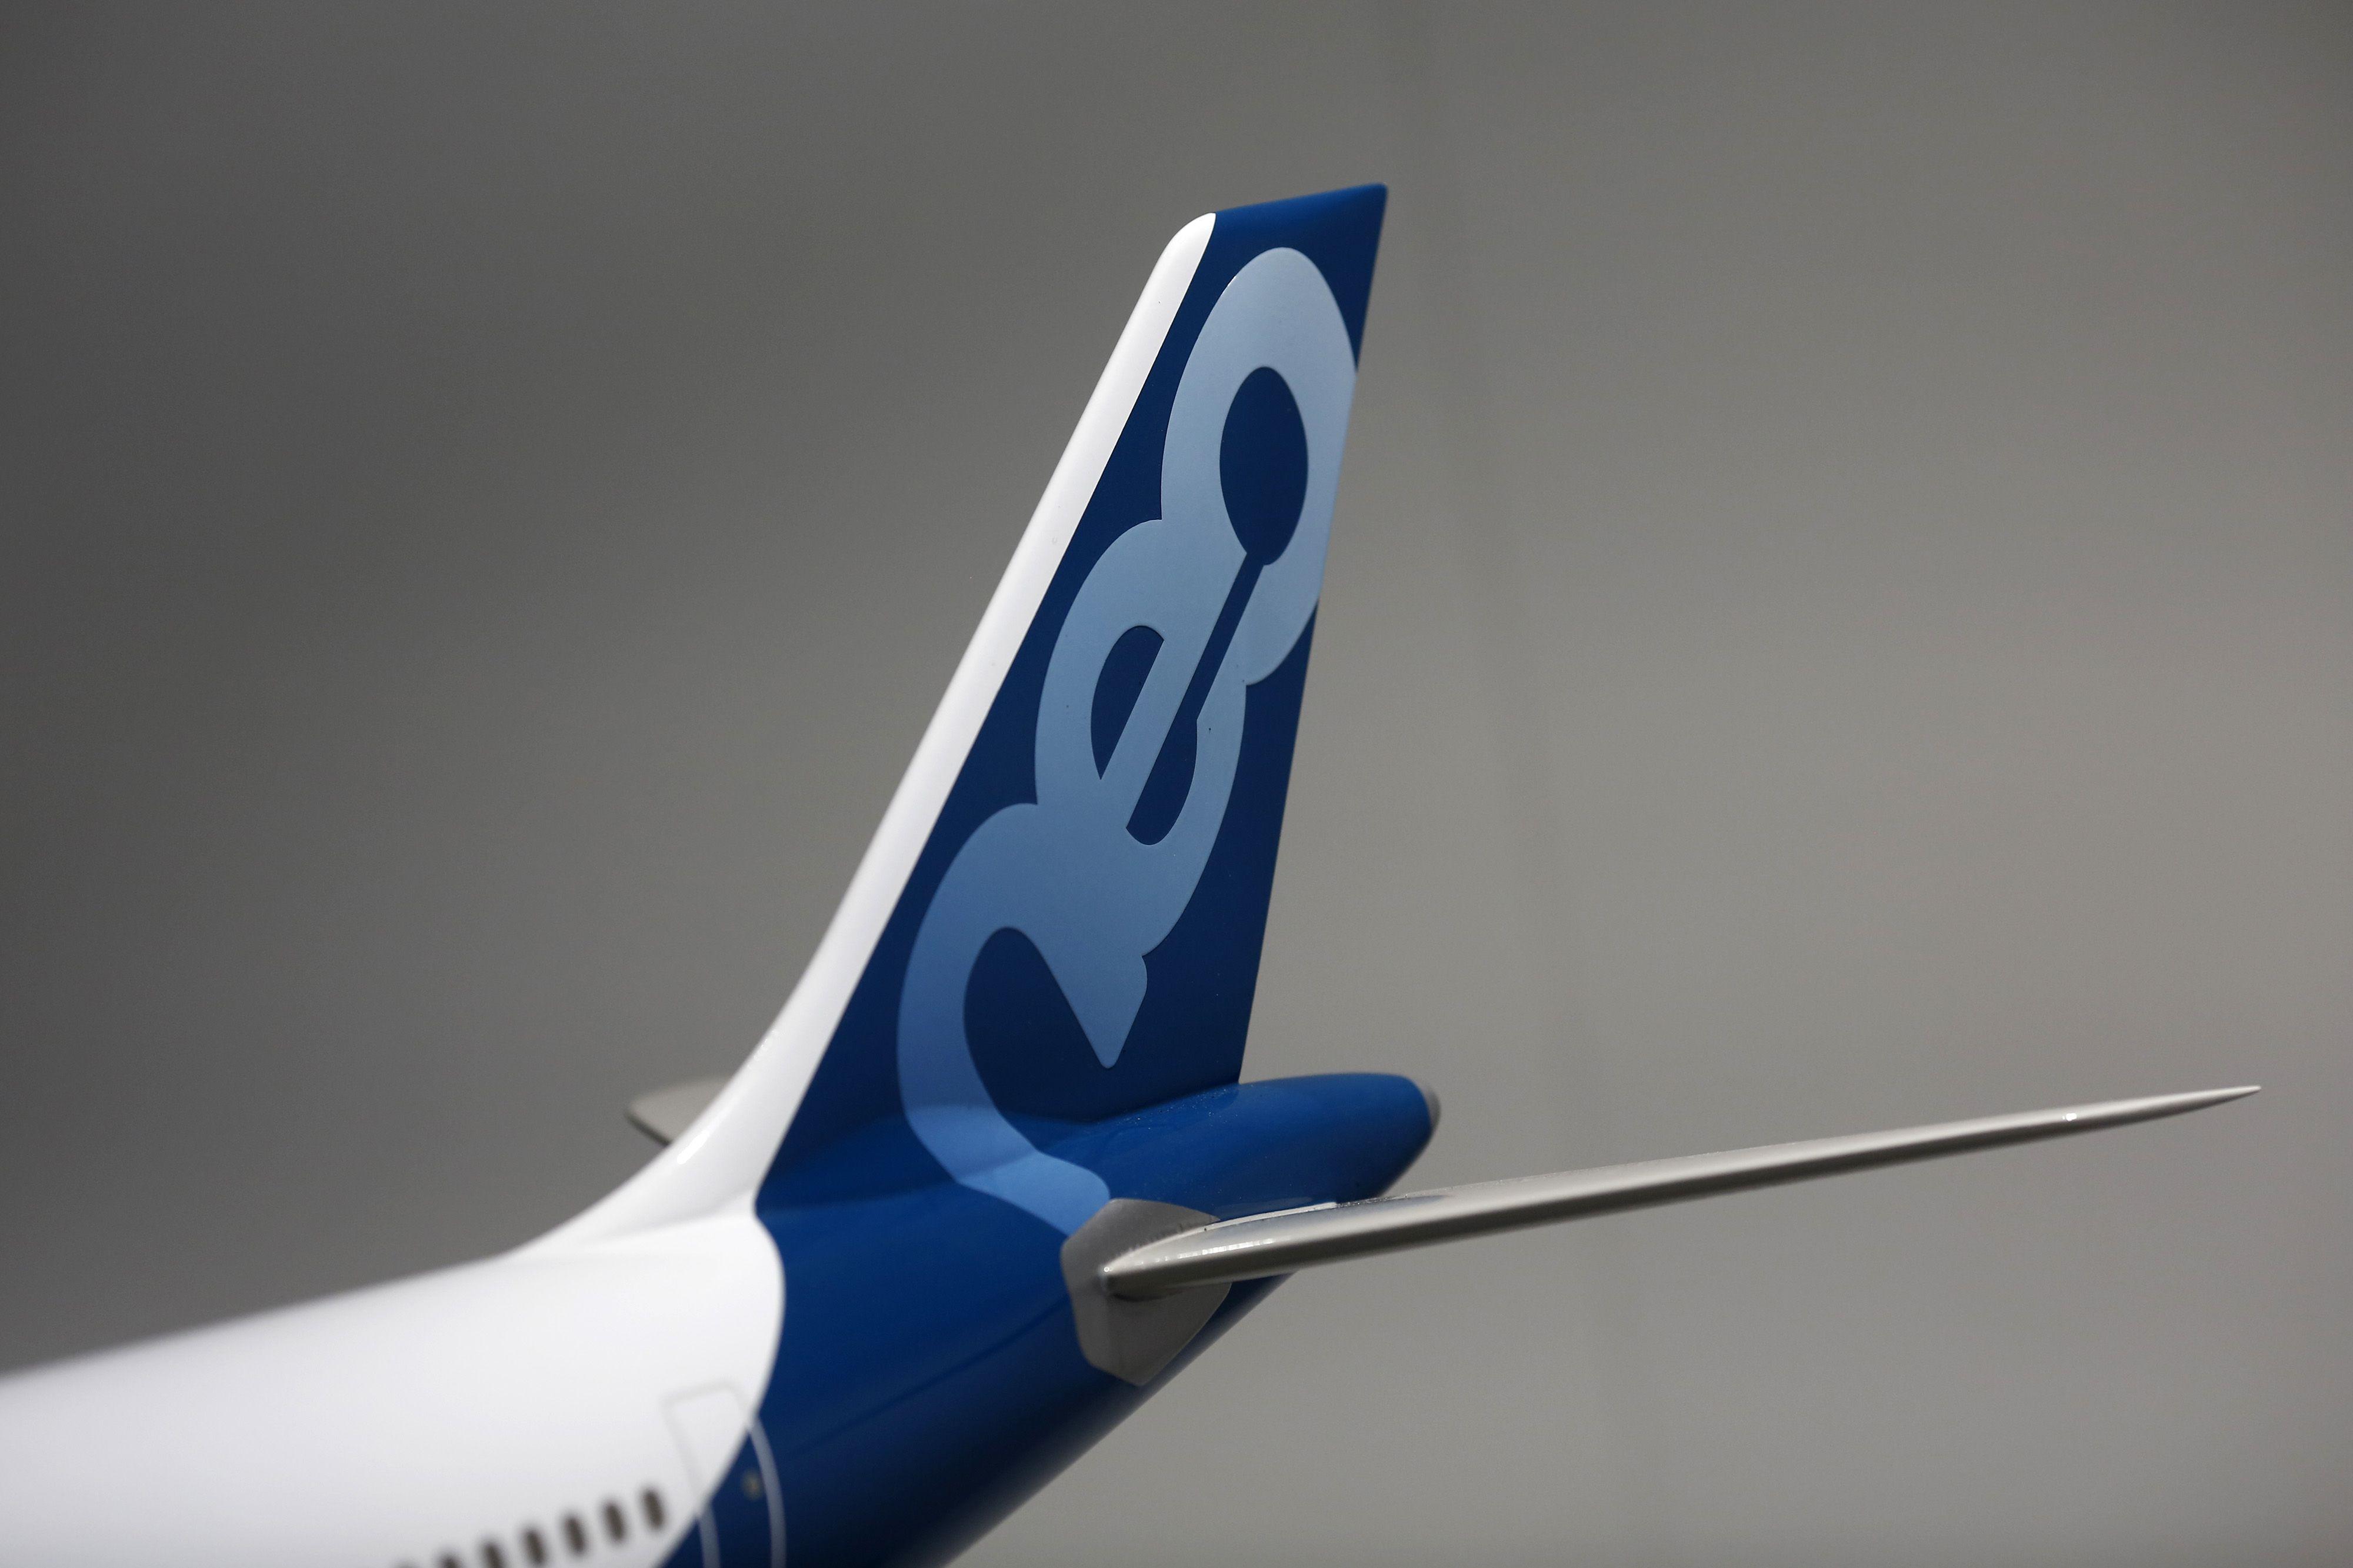 A330neo Logo - Airbus locks up big sale of new plane